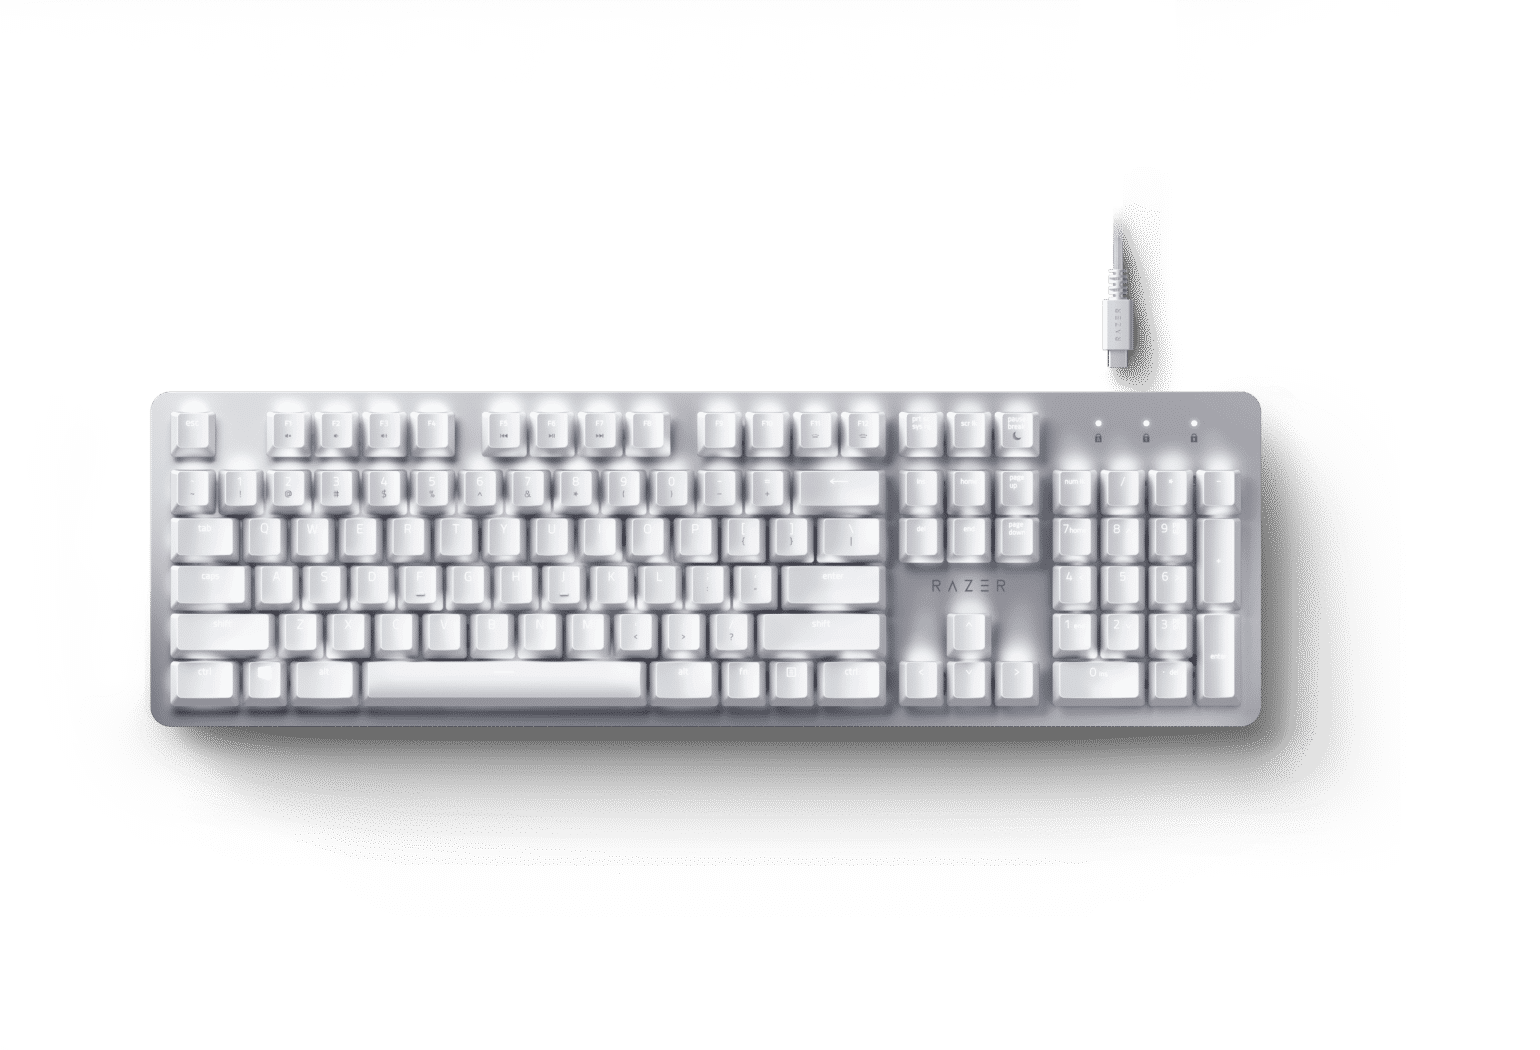 razer pro type keyboard